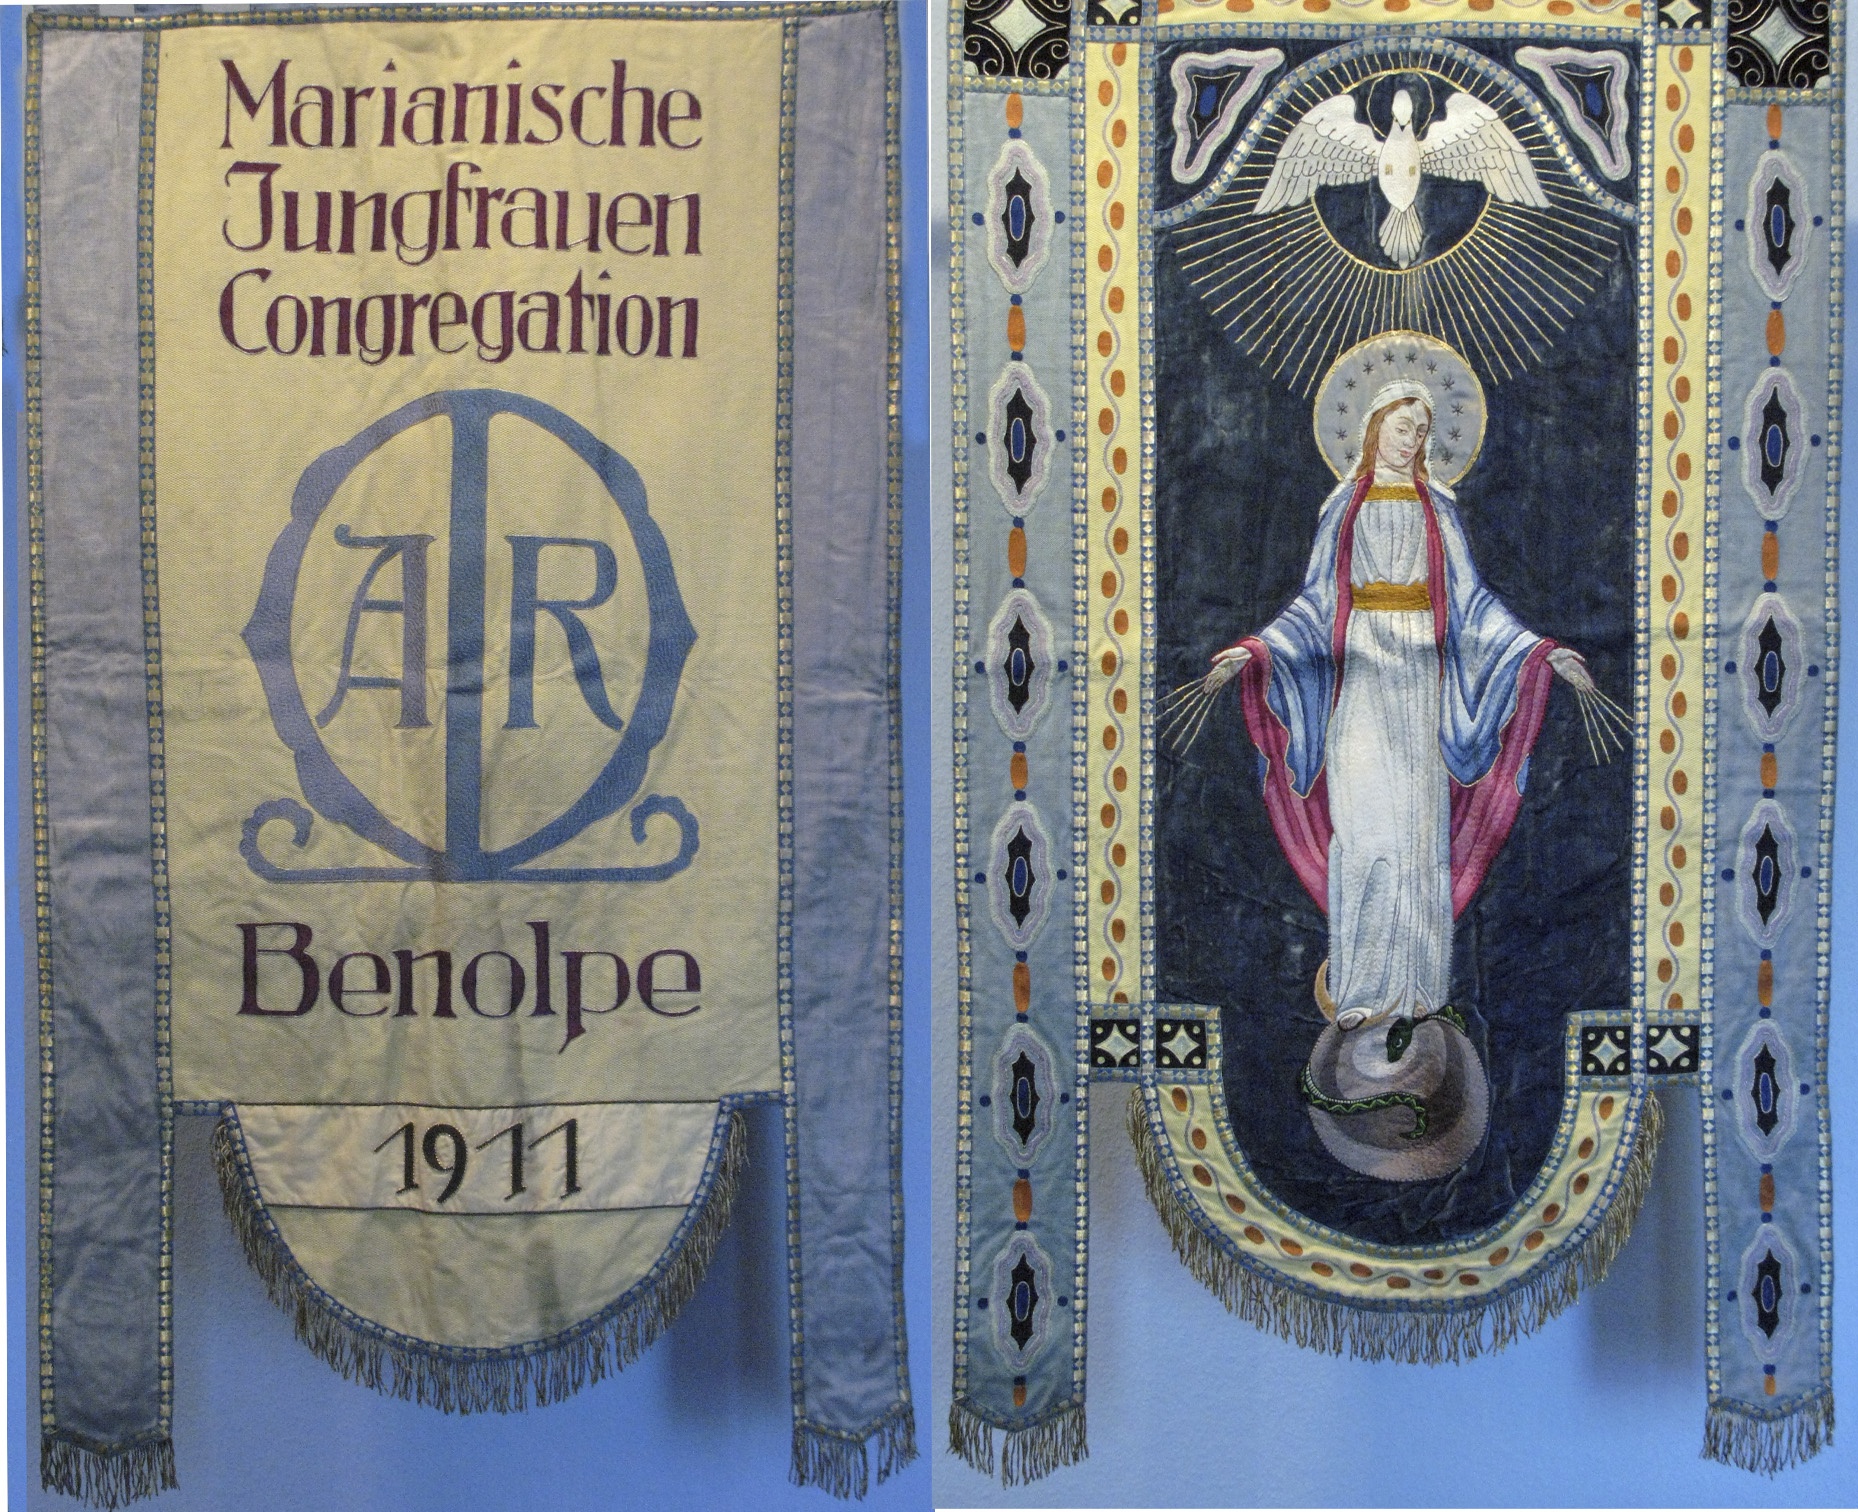 Fahne der Marianischen Jungfrauen Congregation Benolpe (Museum der Stadt Lennestadt CC BY-NC-SA)